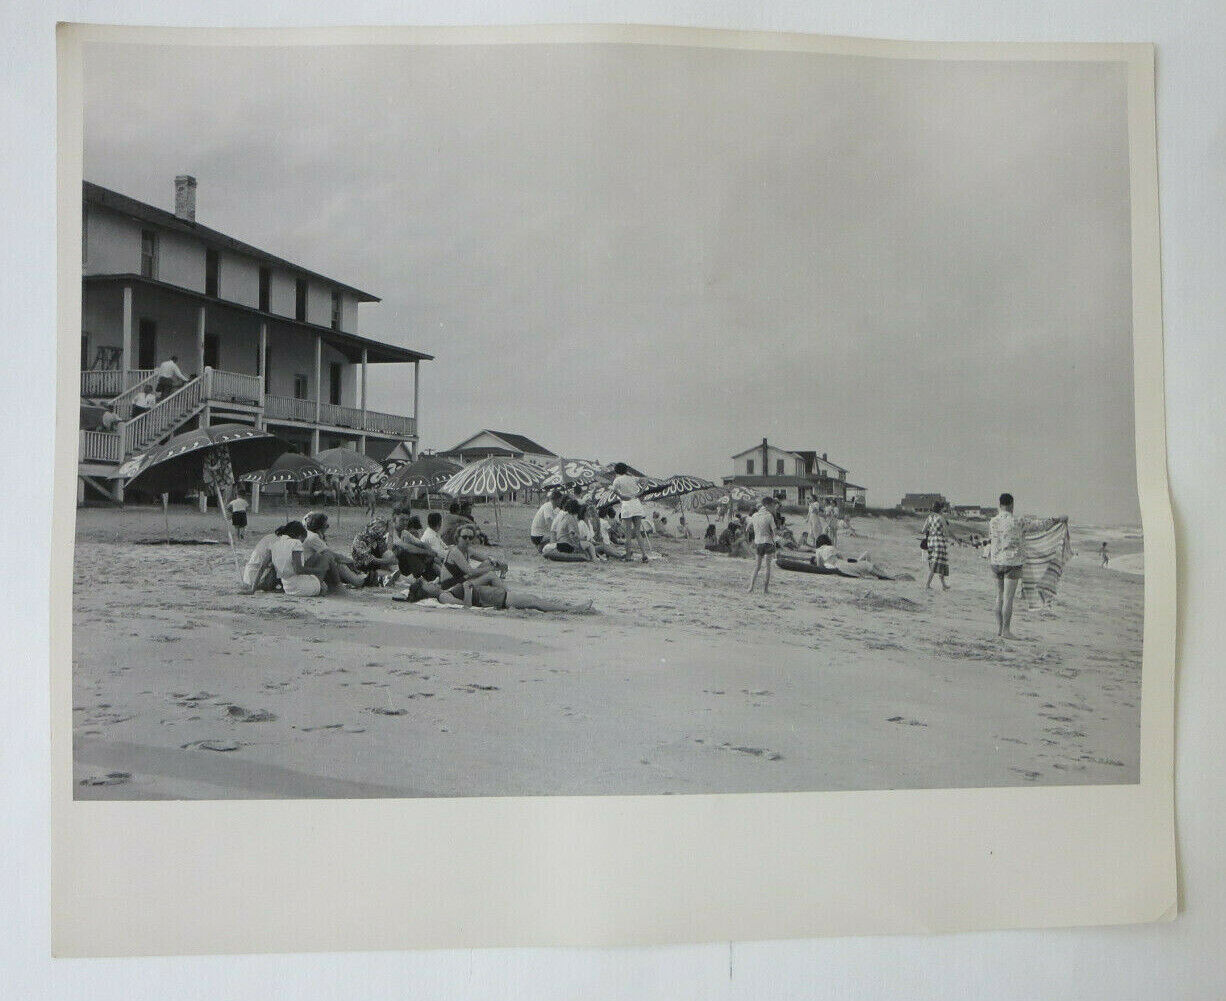 1948 Press 8 x 10 Photo Carolina Beach North Carolina People on Beach